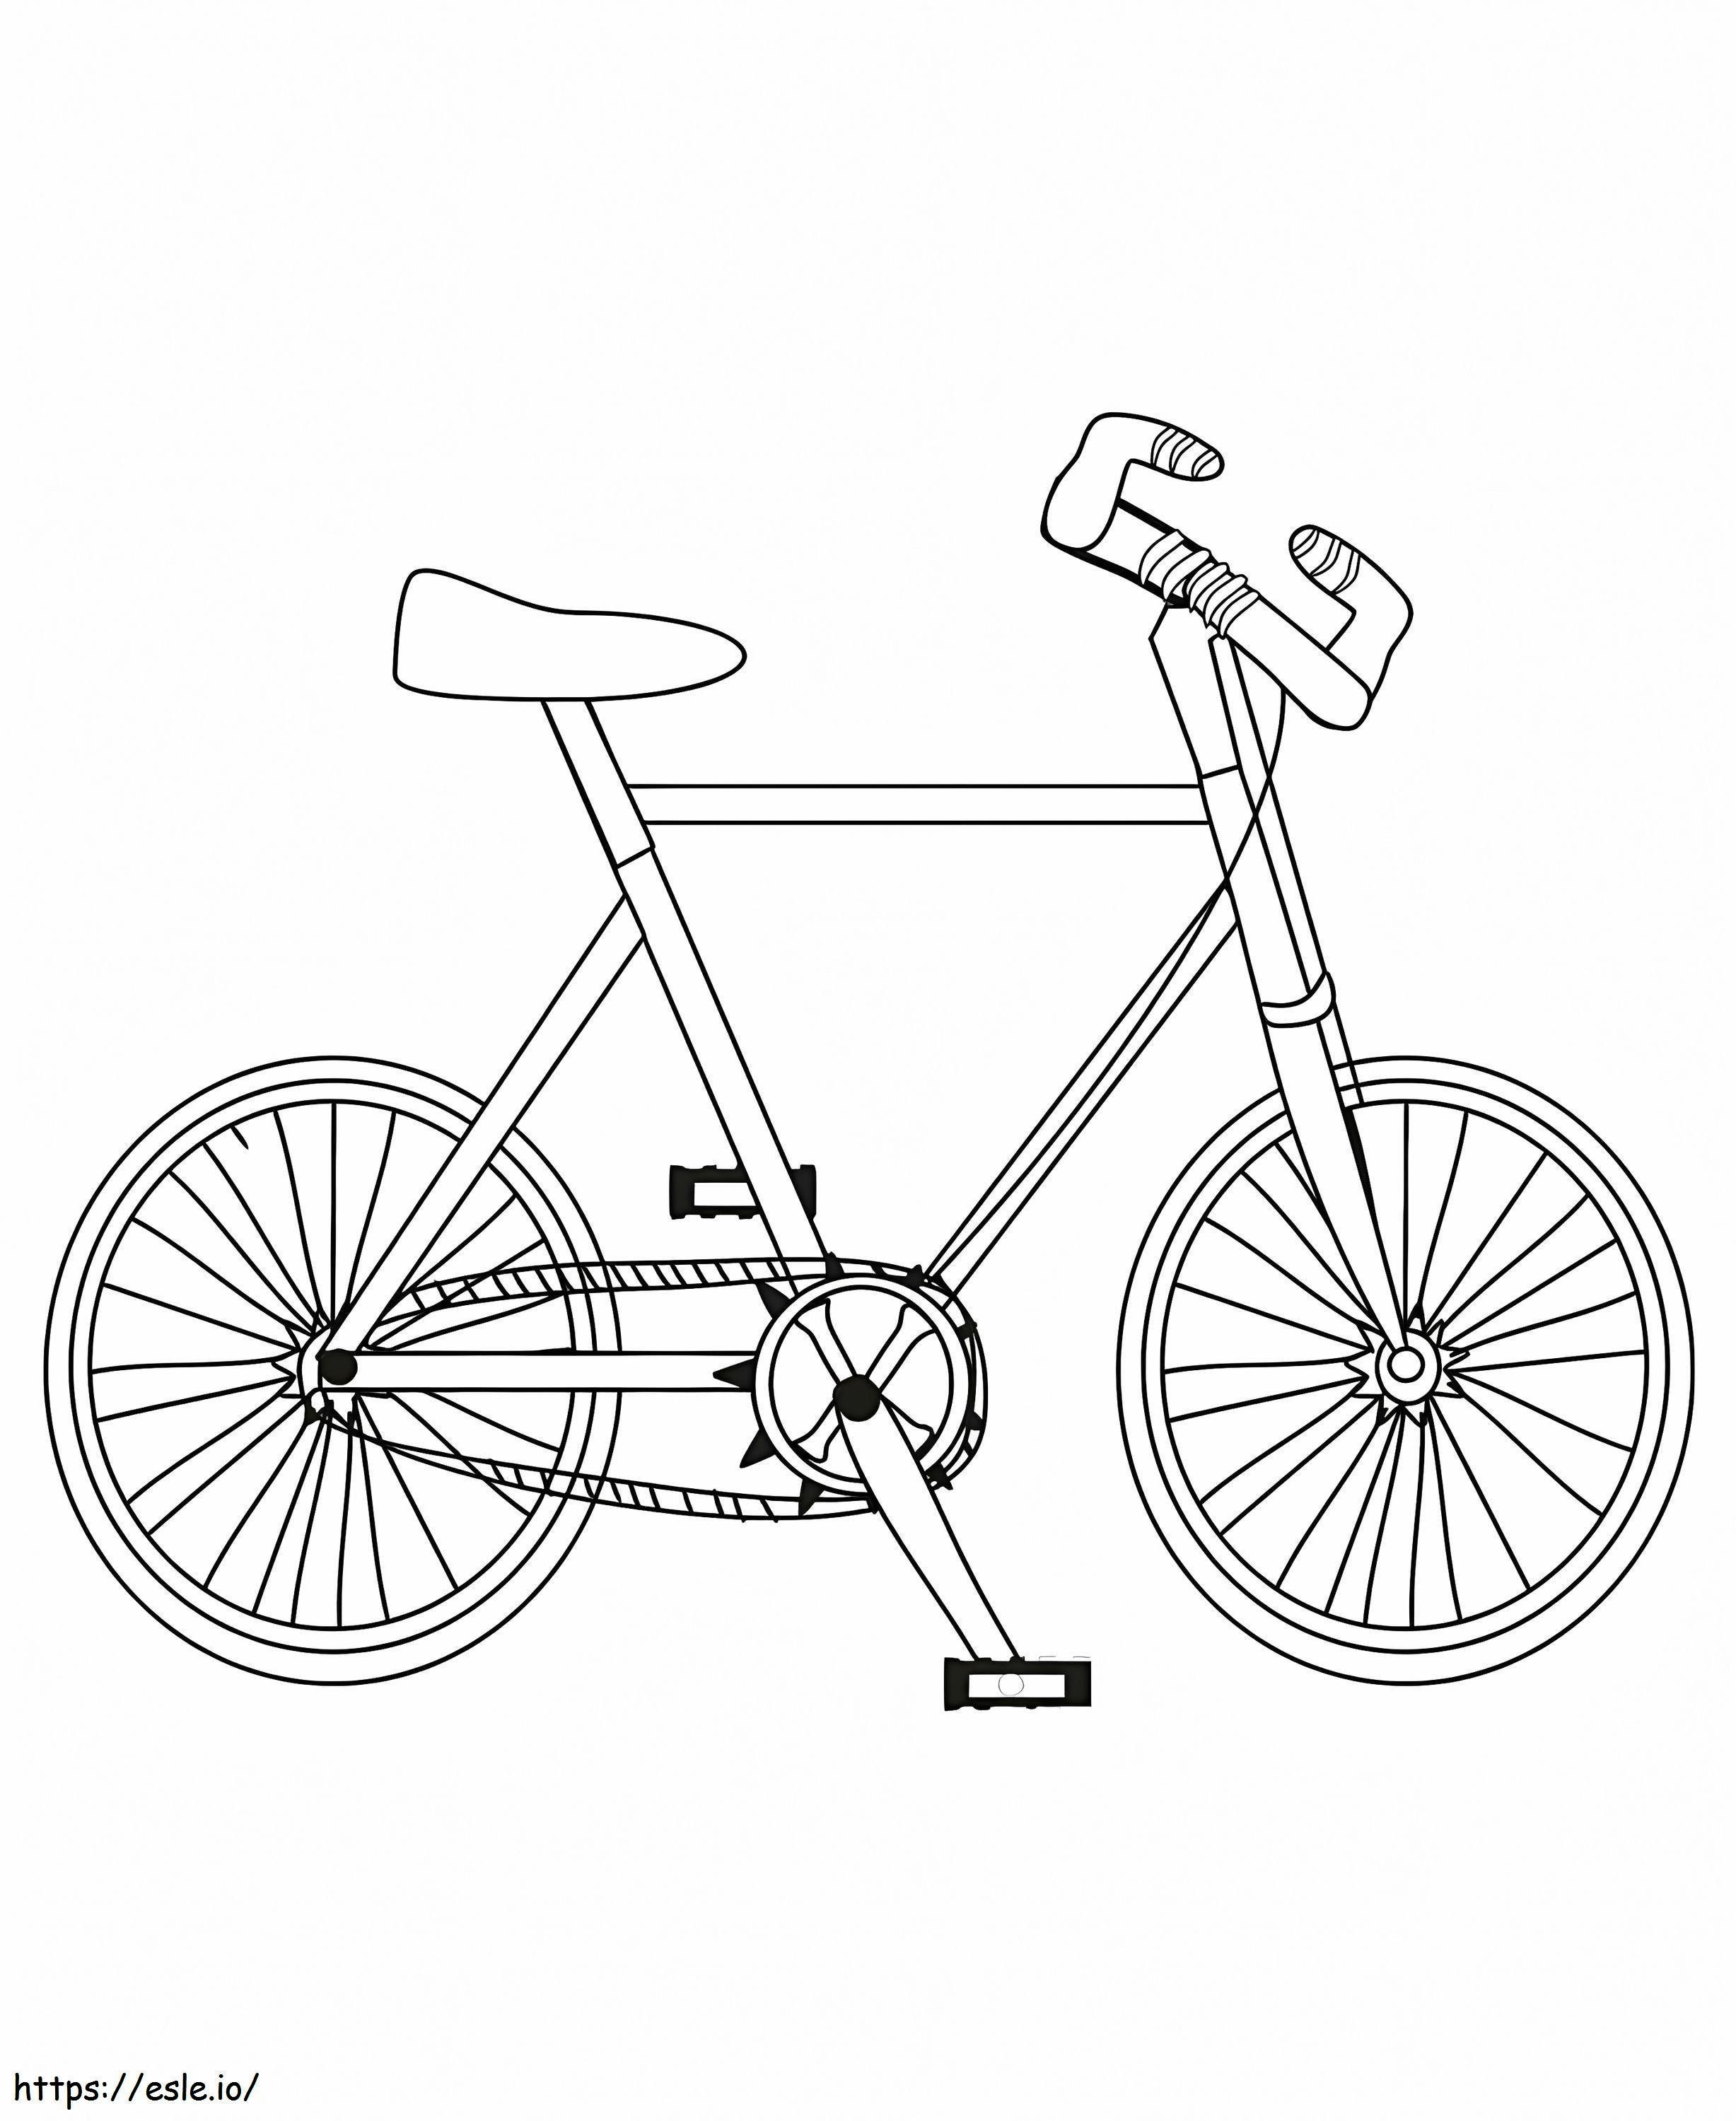 Bicicleta para Imprimir Gratis para colorear